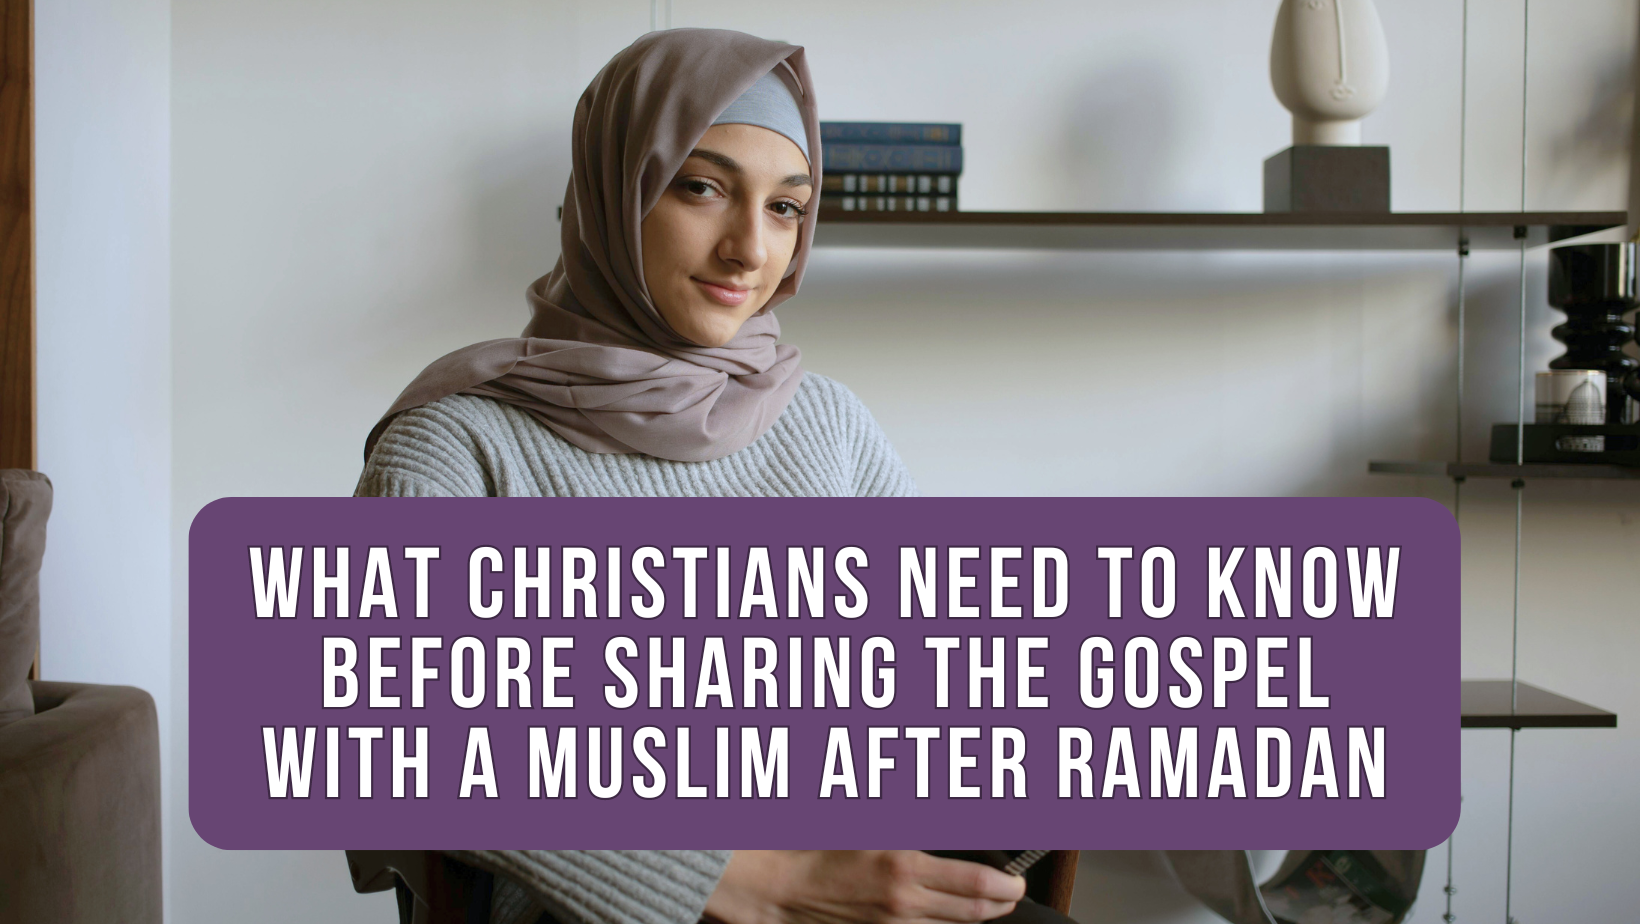 Muslim woman, Sharing the gospel with Muslim after Ramadan